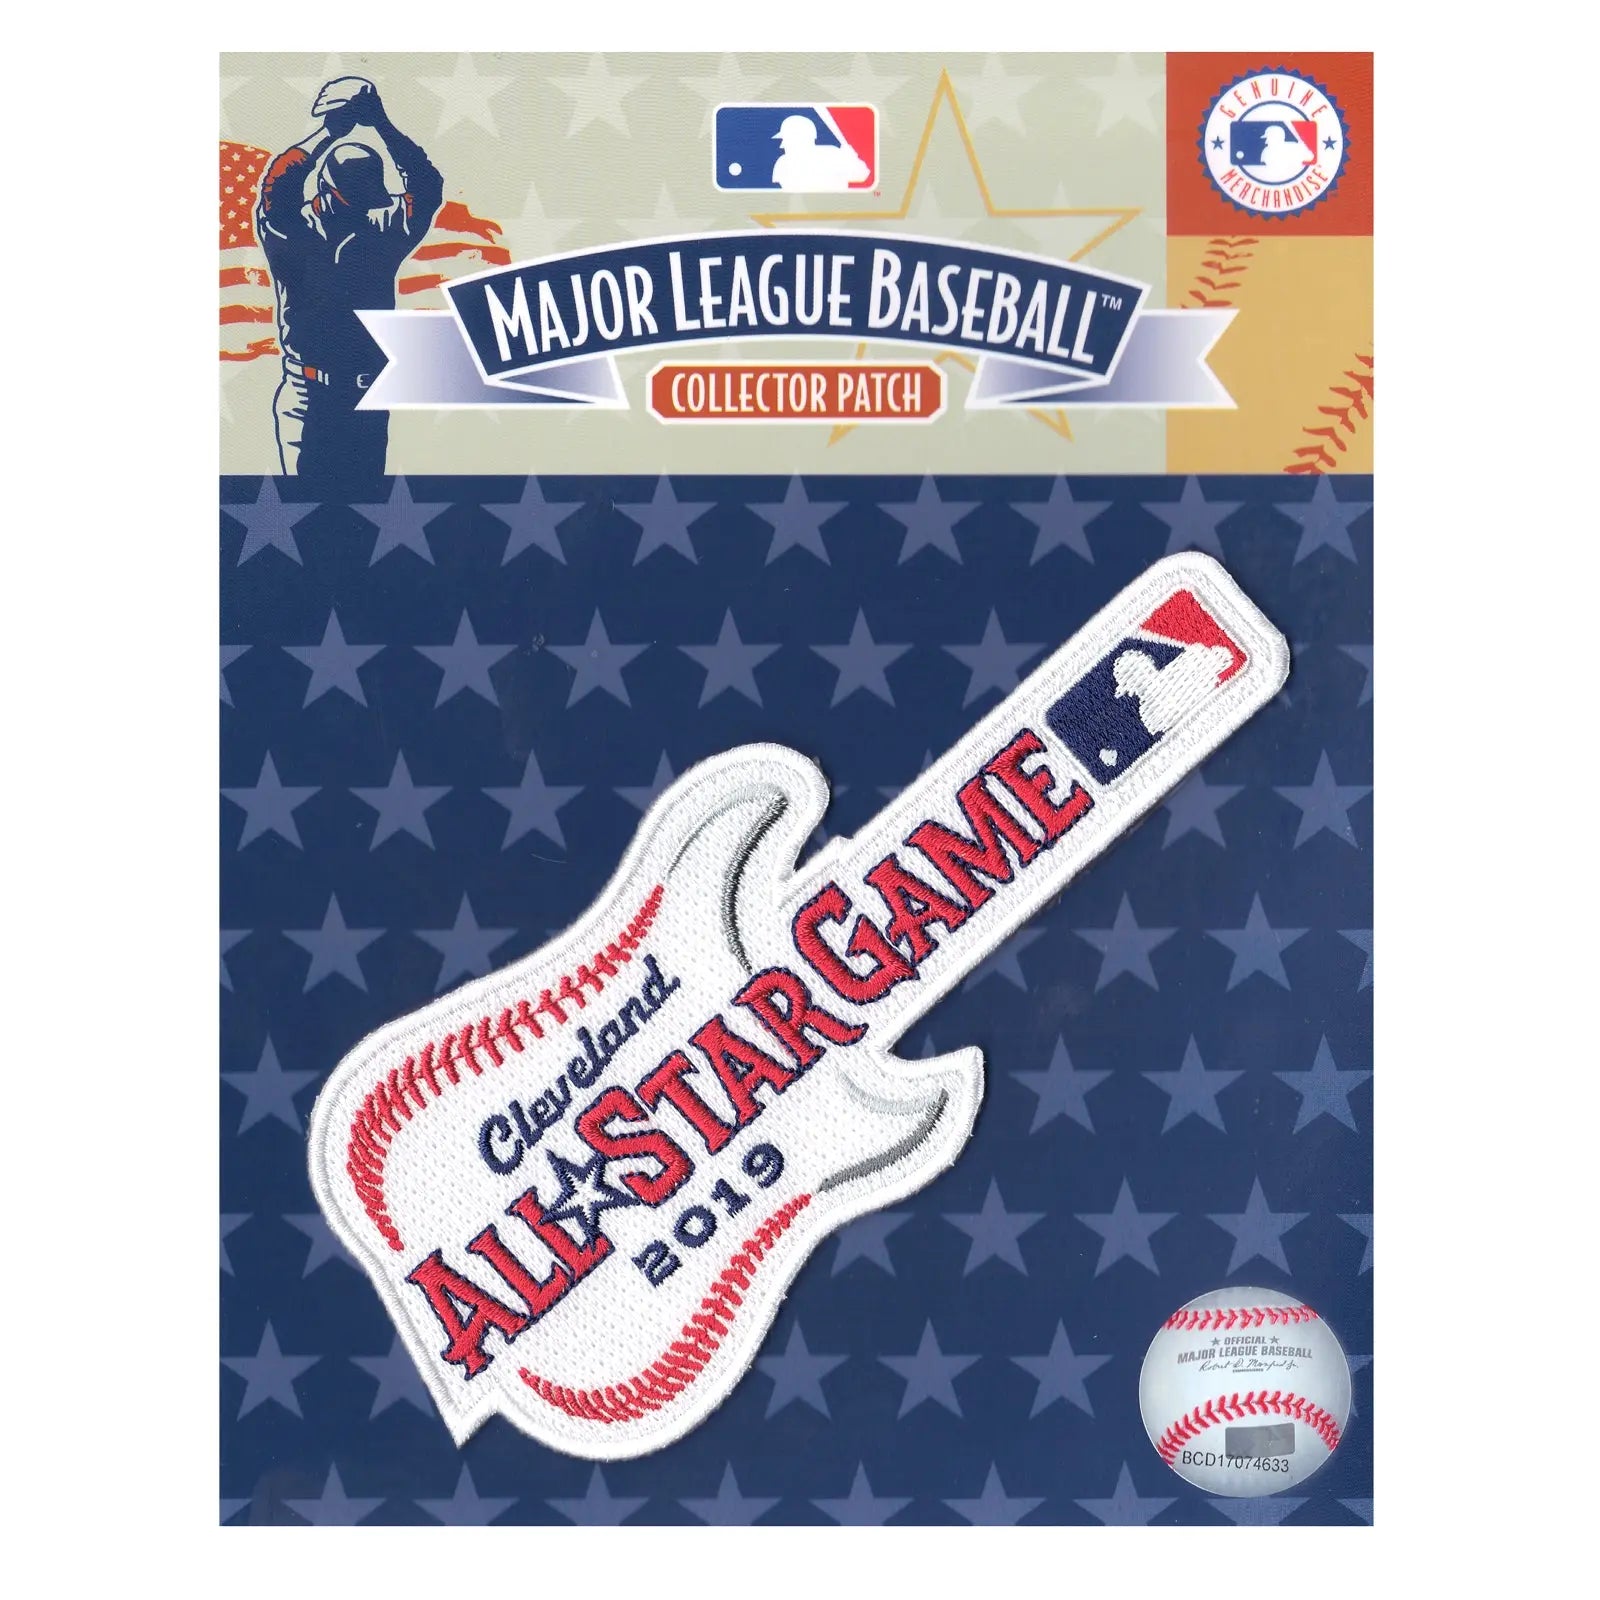 2019 MLB All-Star Game updates